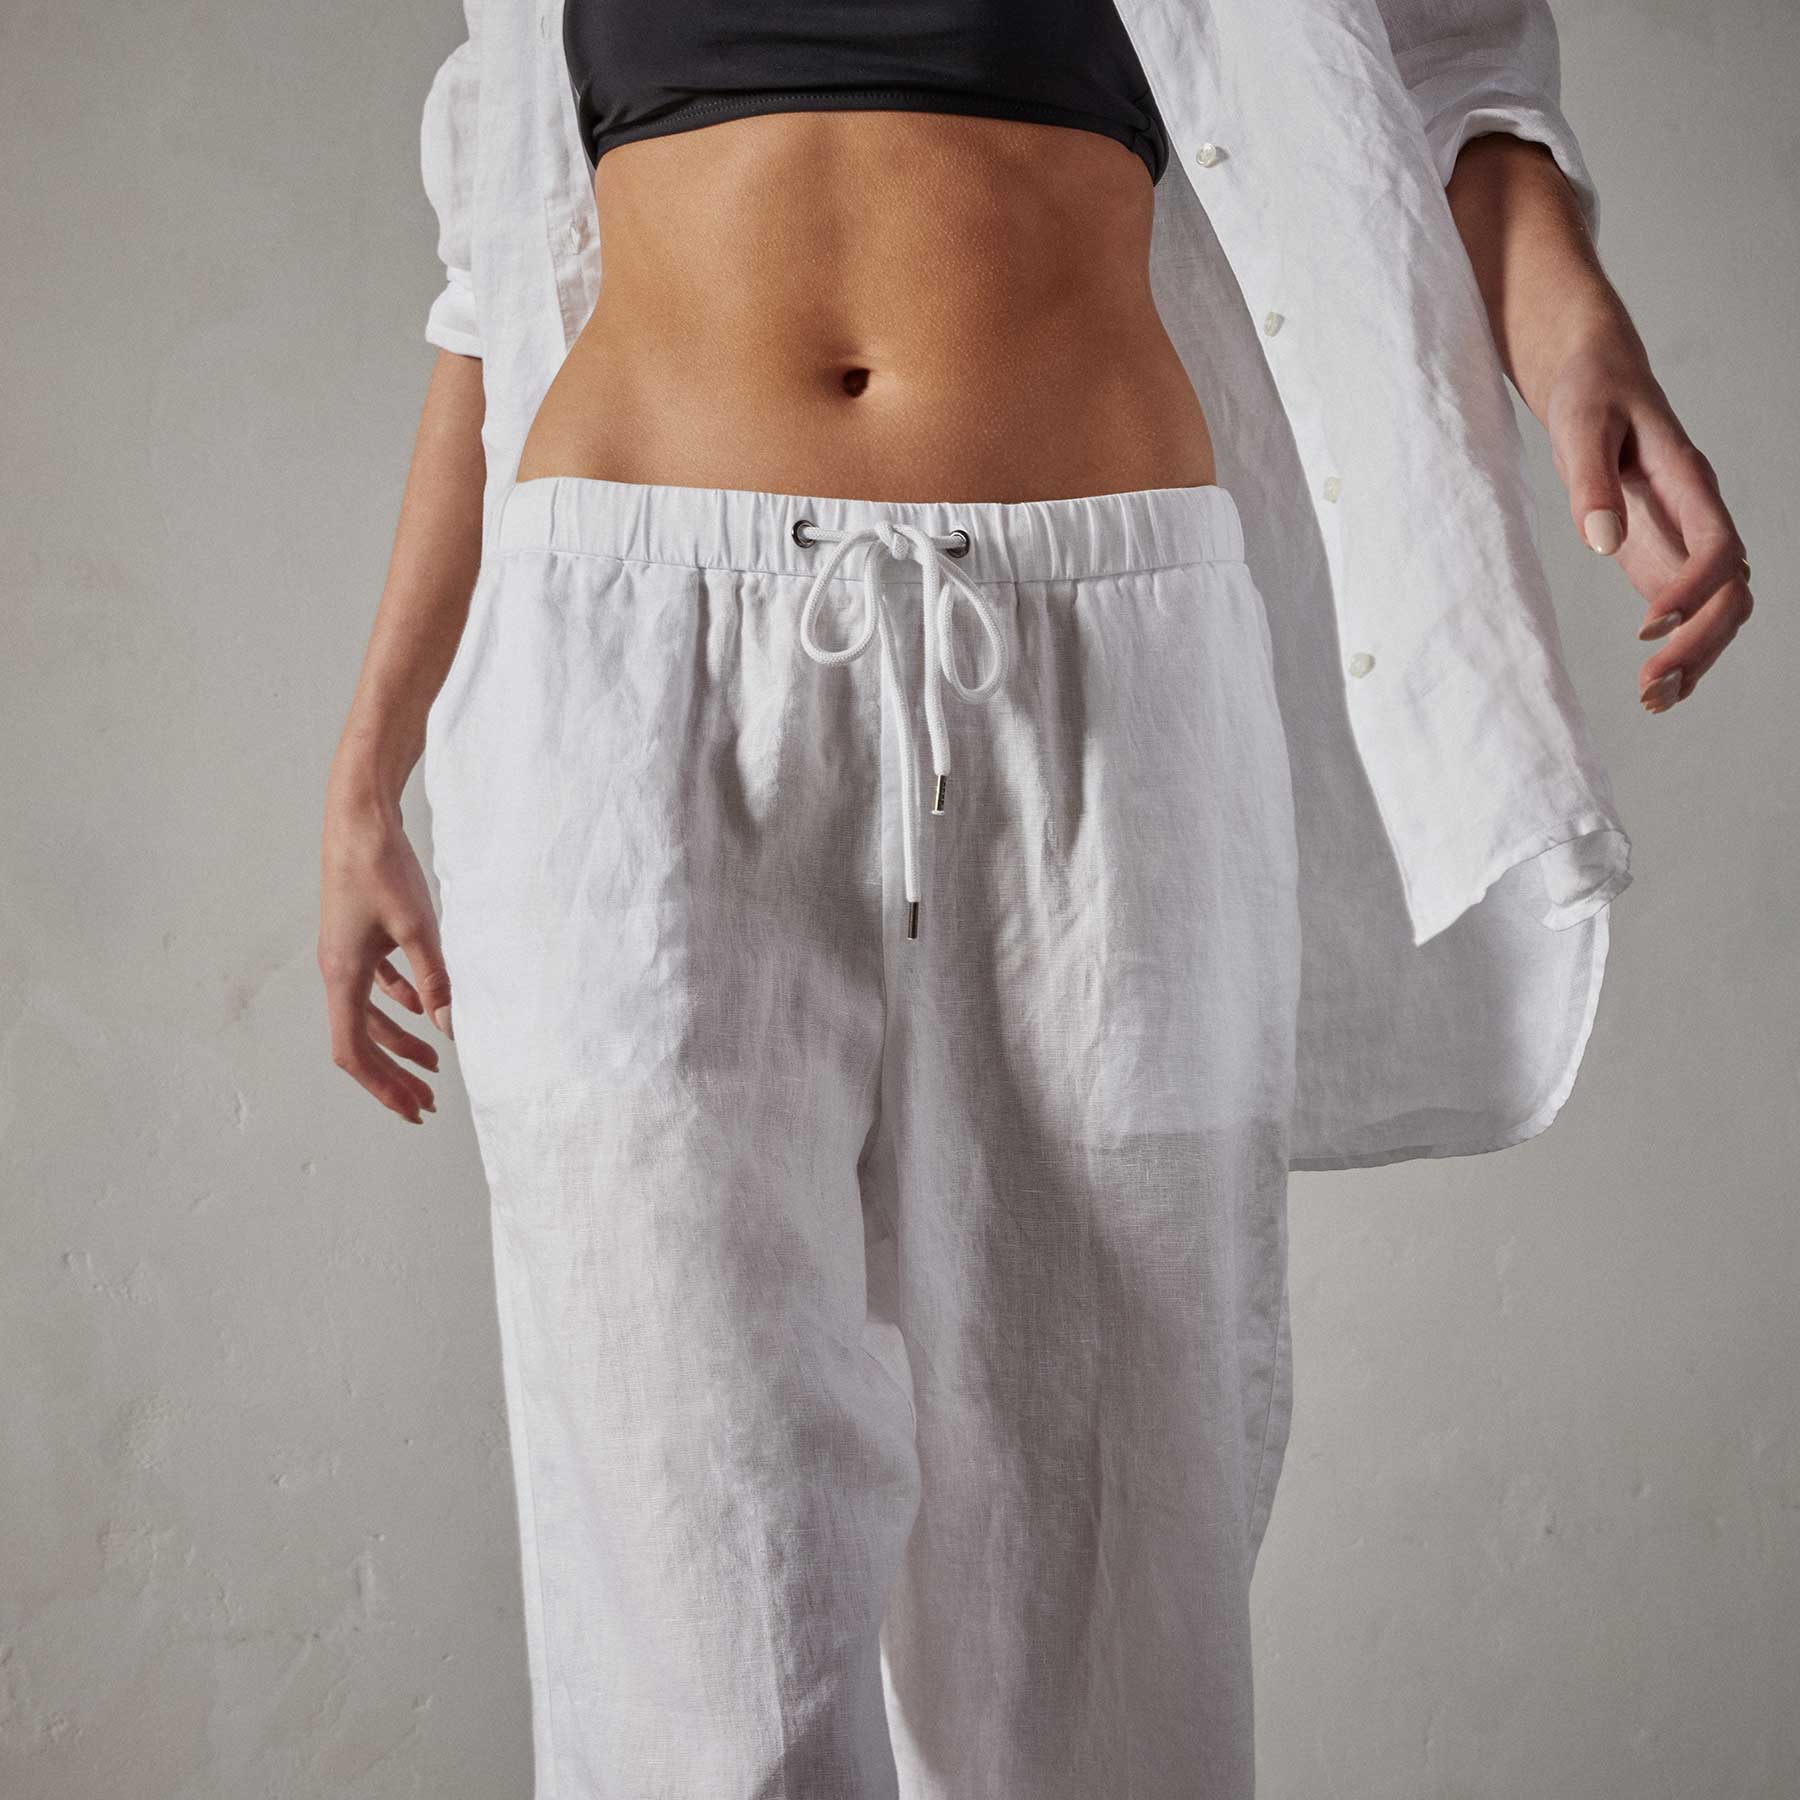  White Linen Pants - Women's Pants / Women's Clothing: Clothing,  Shoes & Jewelry